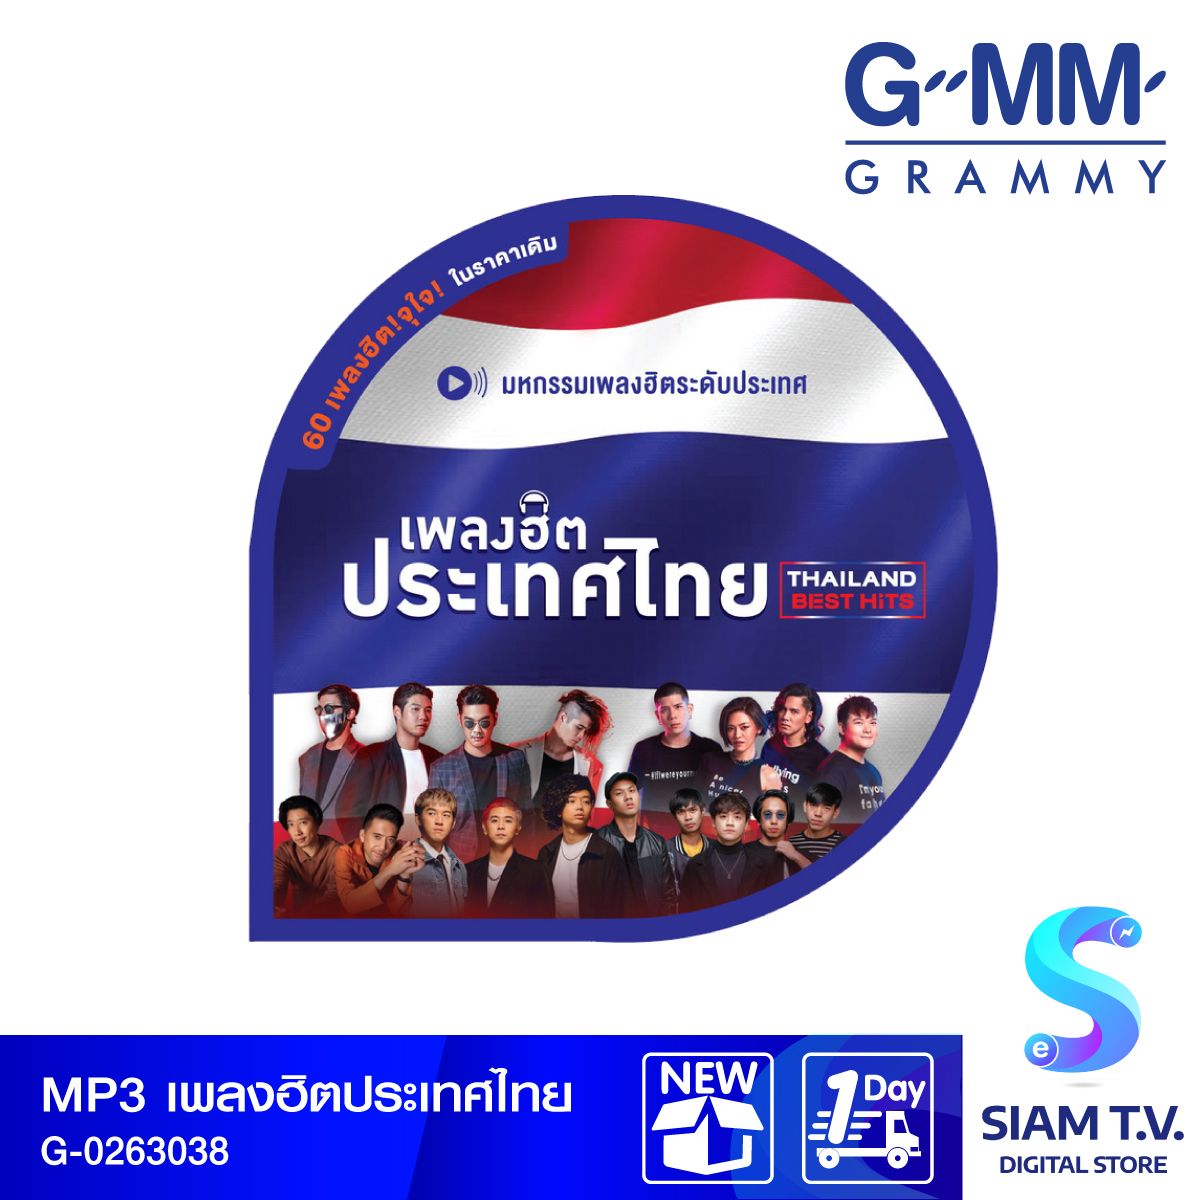 GMM GRAMMY MP3เพลงฮิตประเทศไทยThailand Best Hits Branded